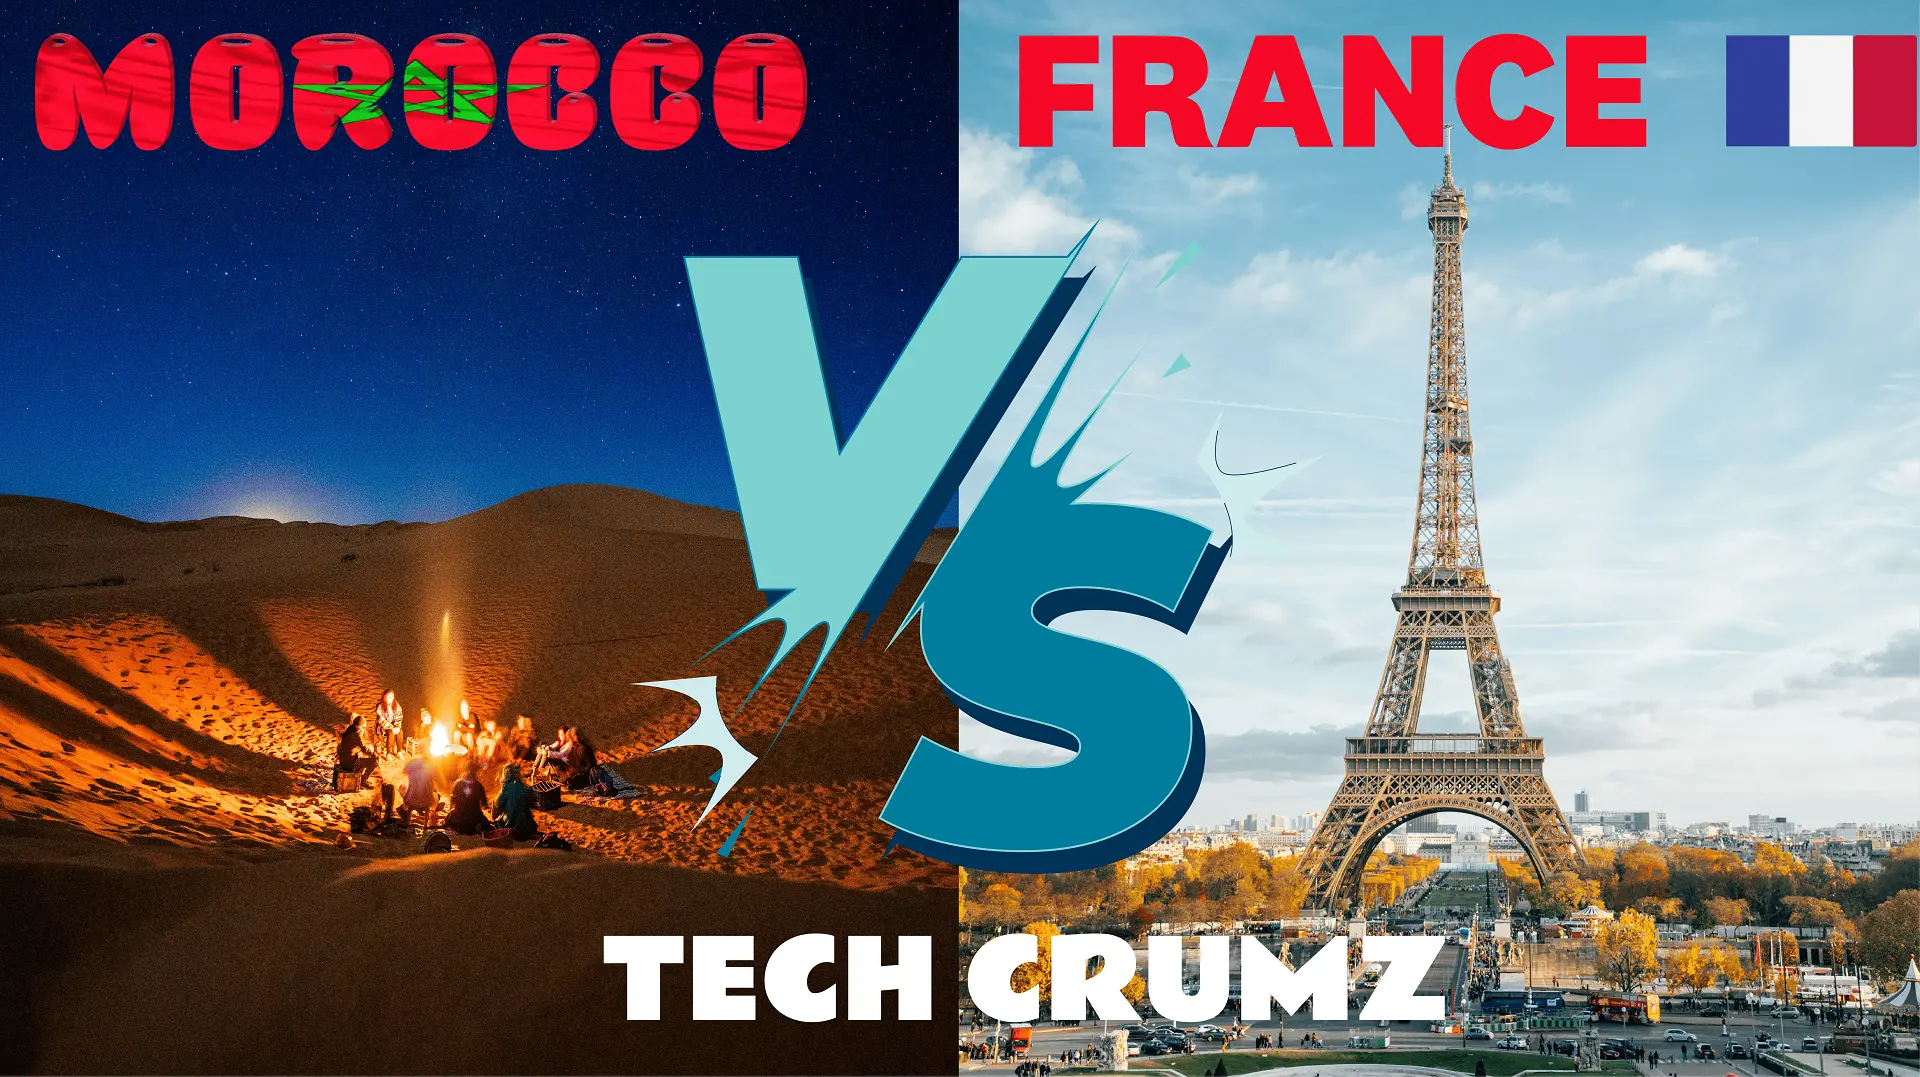 France vs Morocco Showdown Tech Crumz